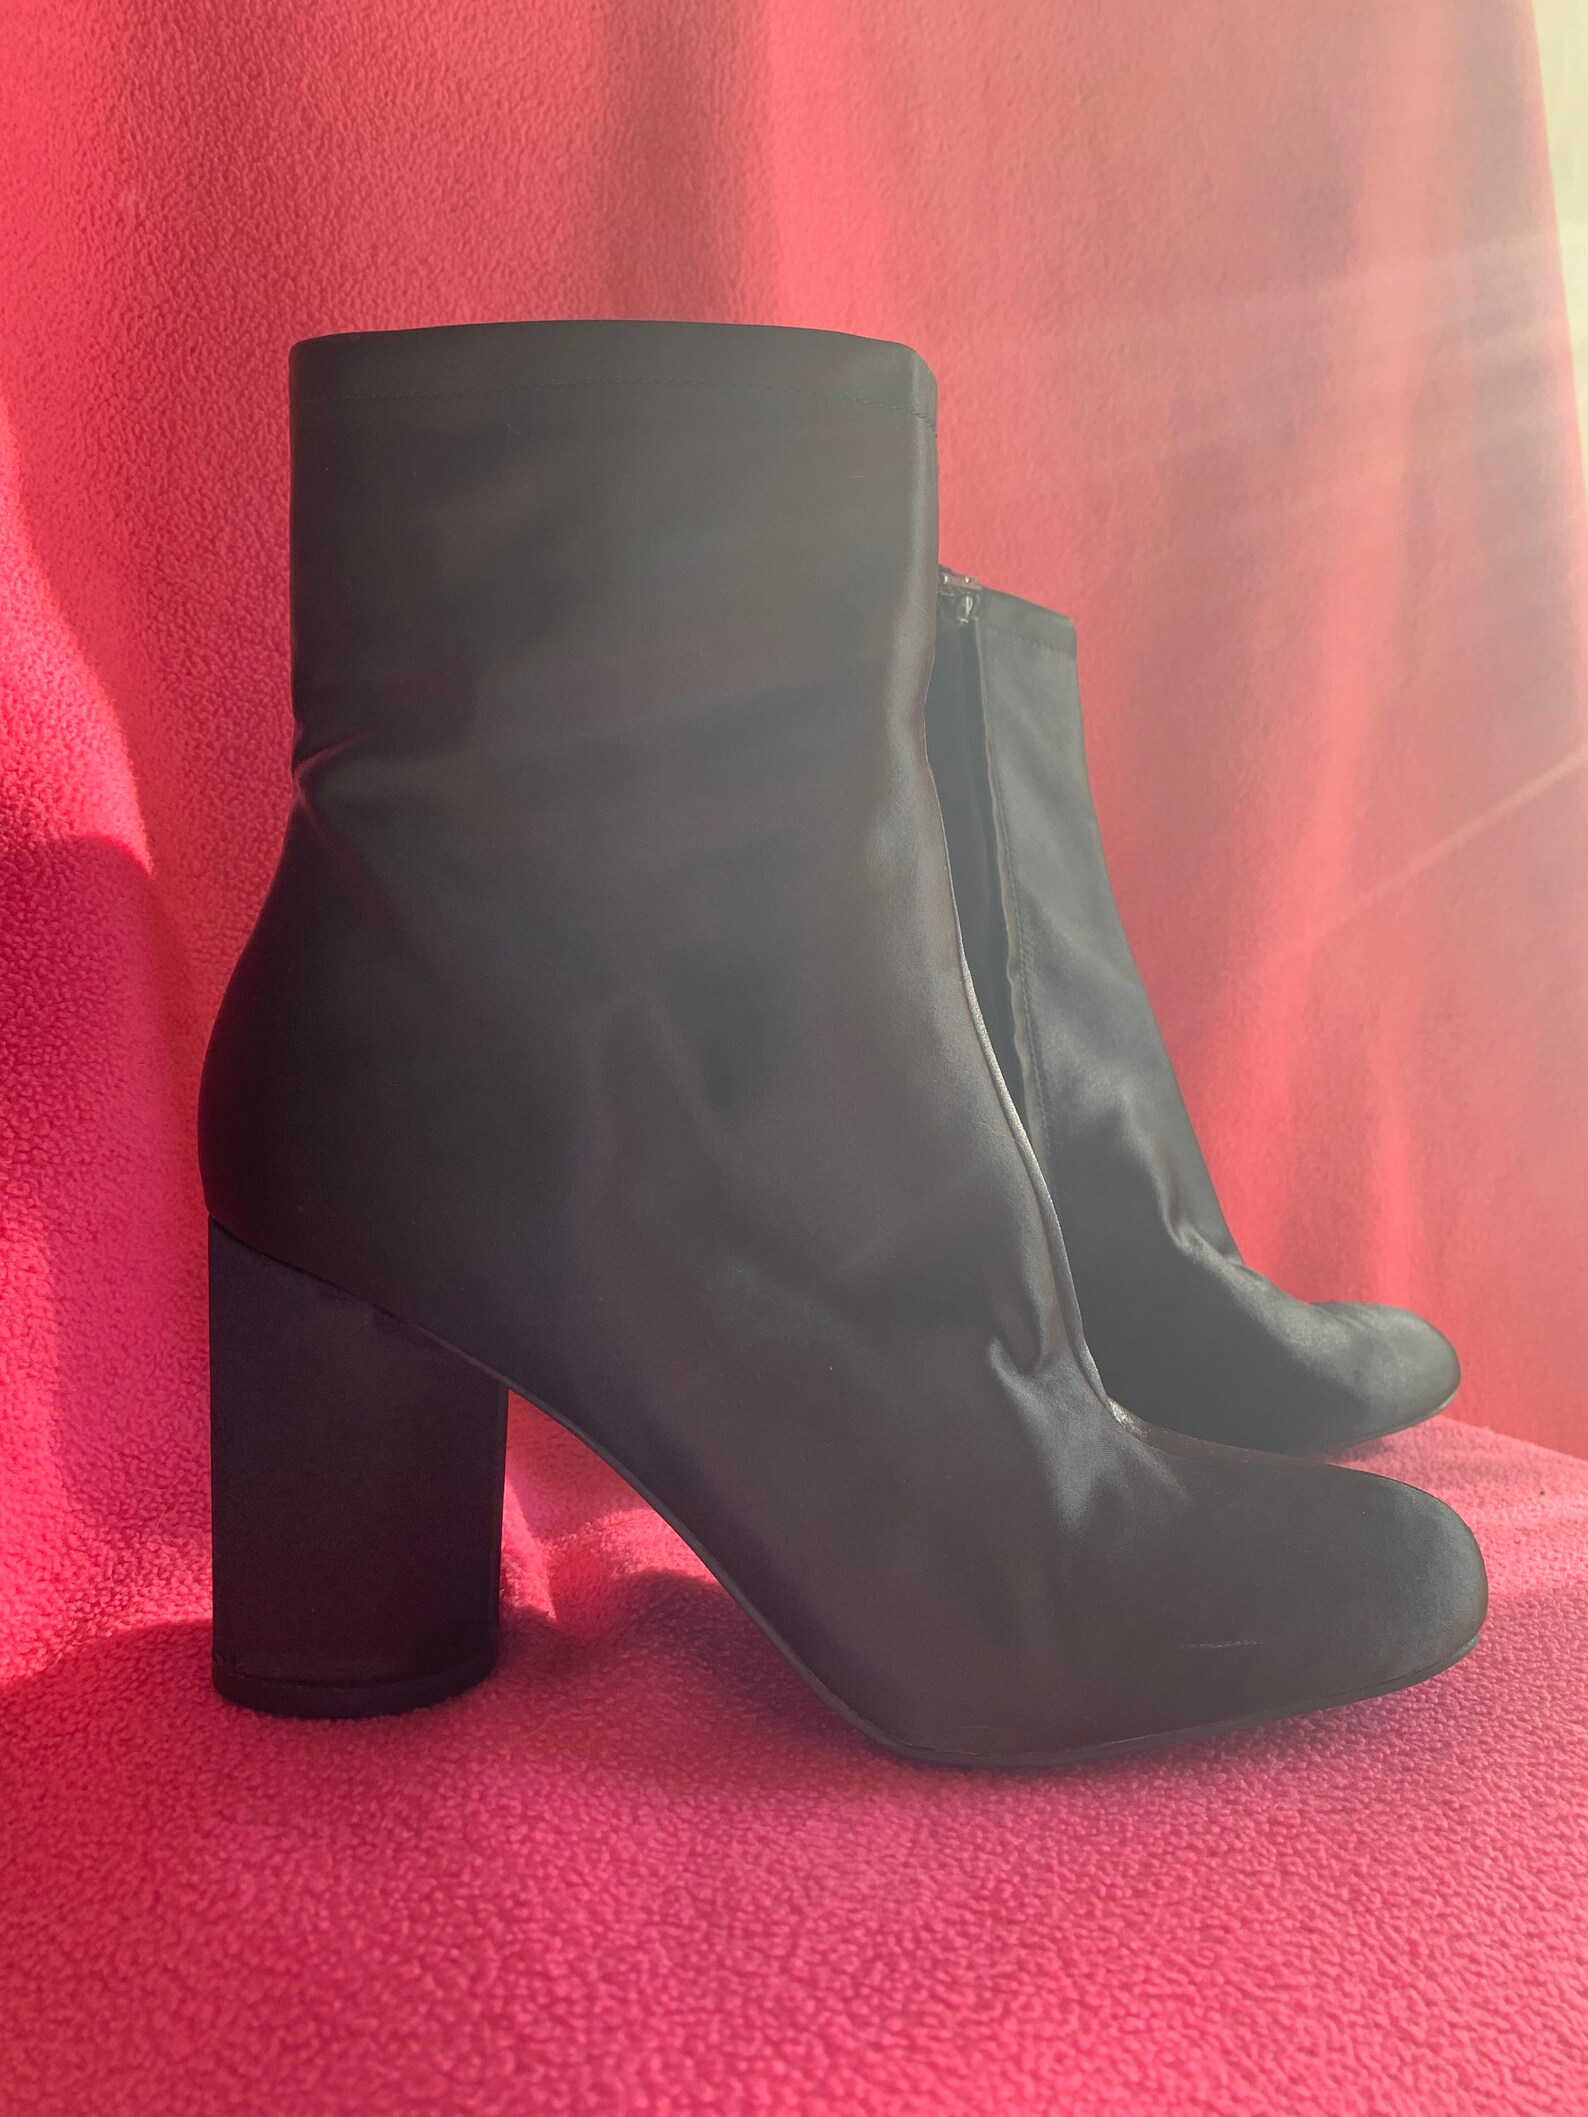 Black Satin Heeled Boots by Jessica Simpson Sleek & Stylish | Etsy